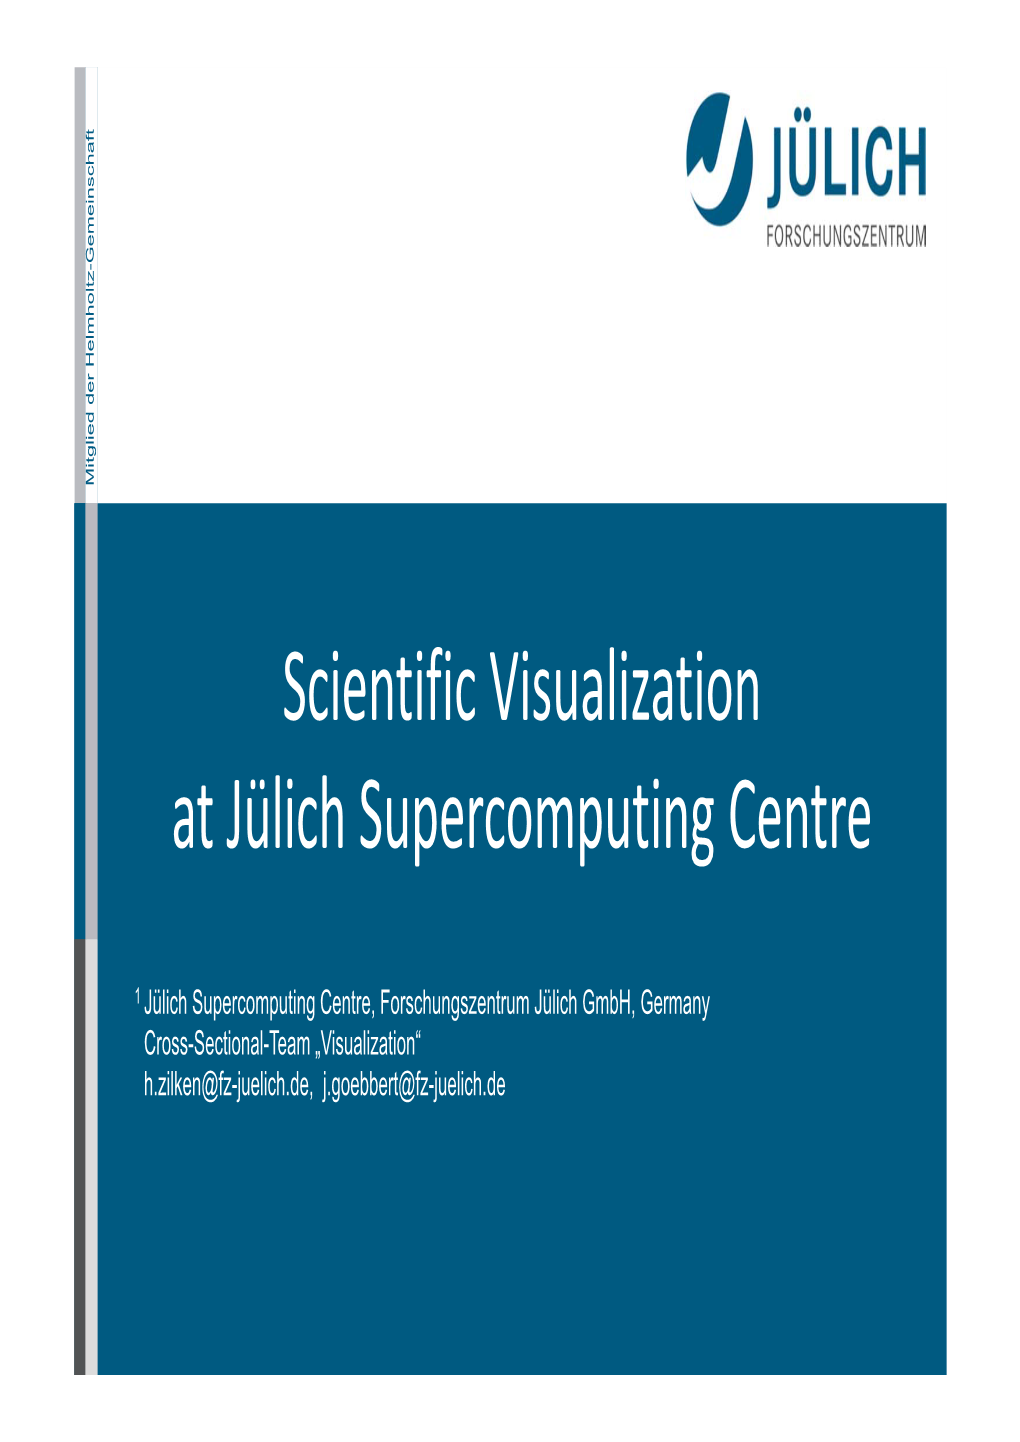 Scientific Visualization at Jülich Supercomputing Centre